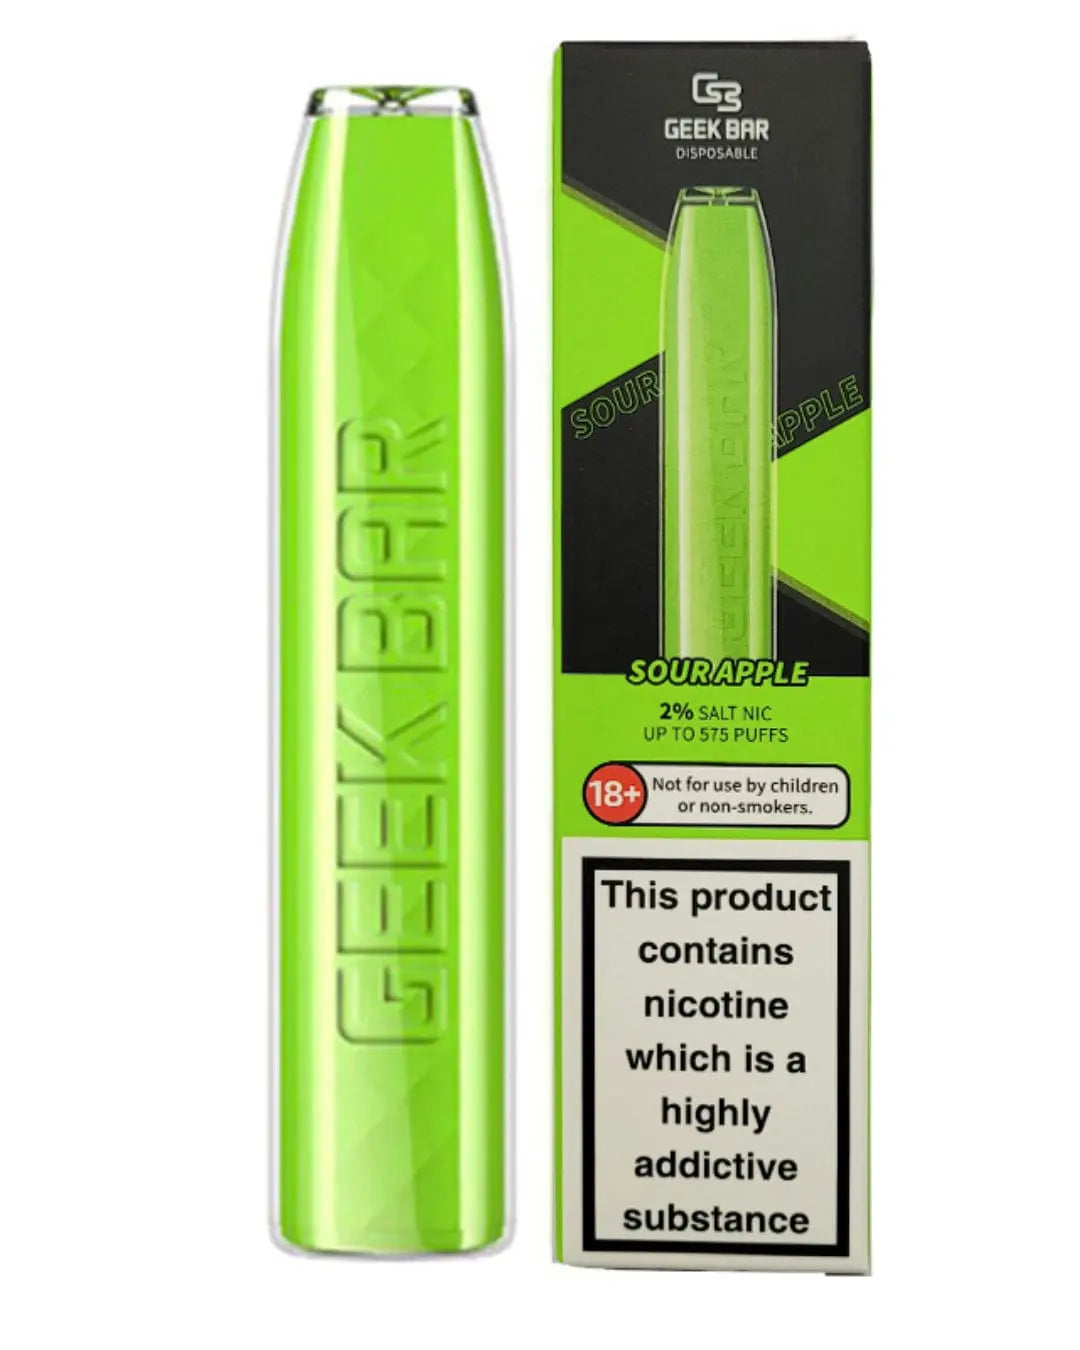 Geek Bar Disposable Sour Apple Disposable Vapes